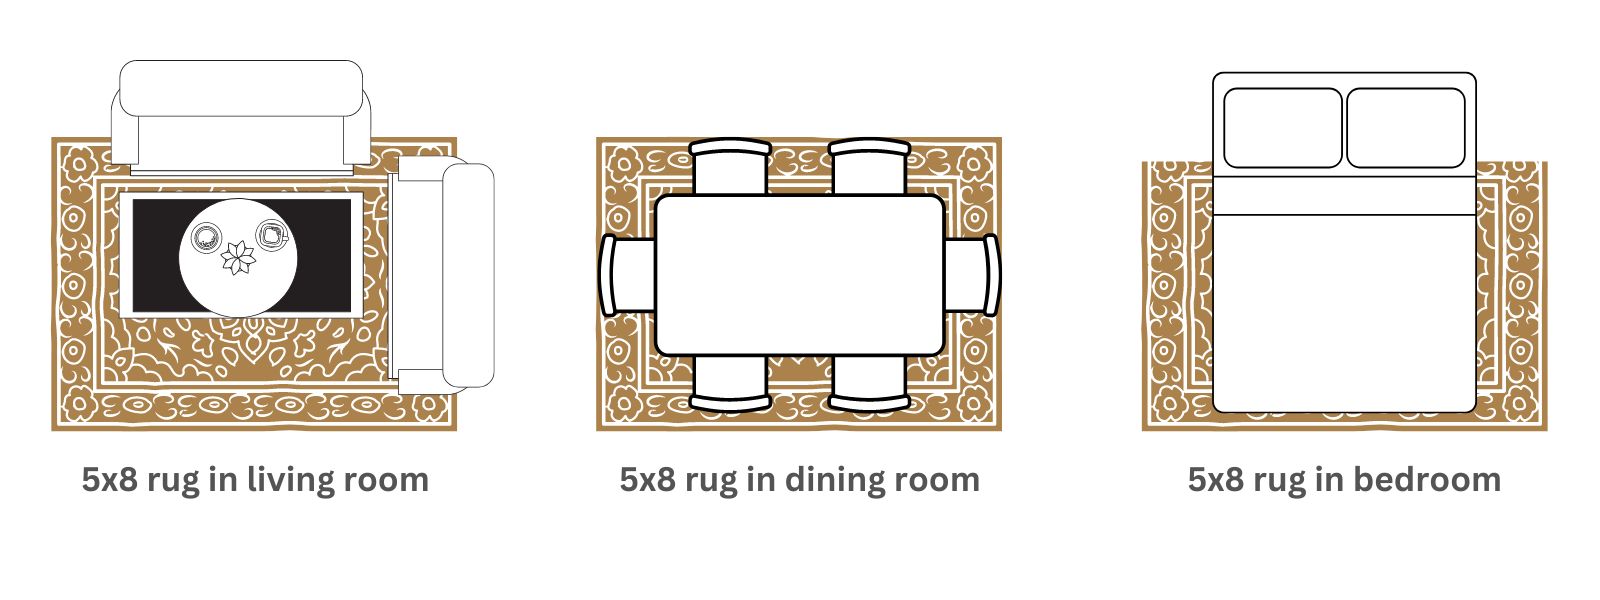 5x8 carpet